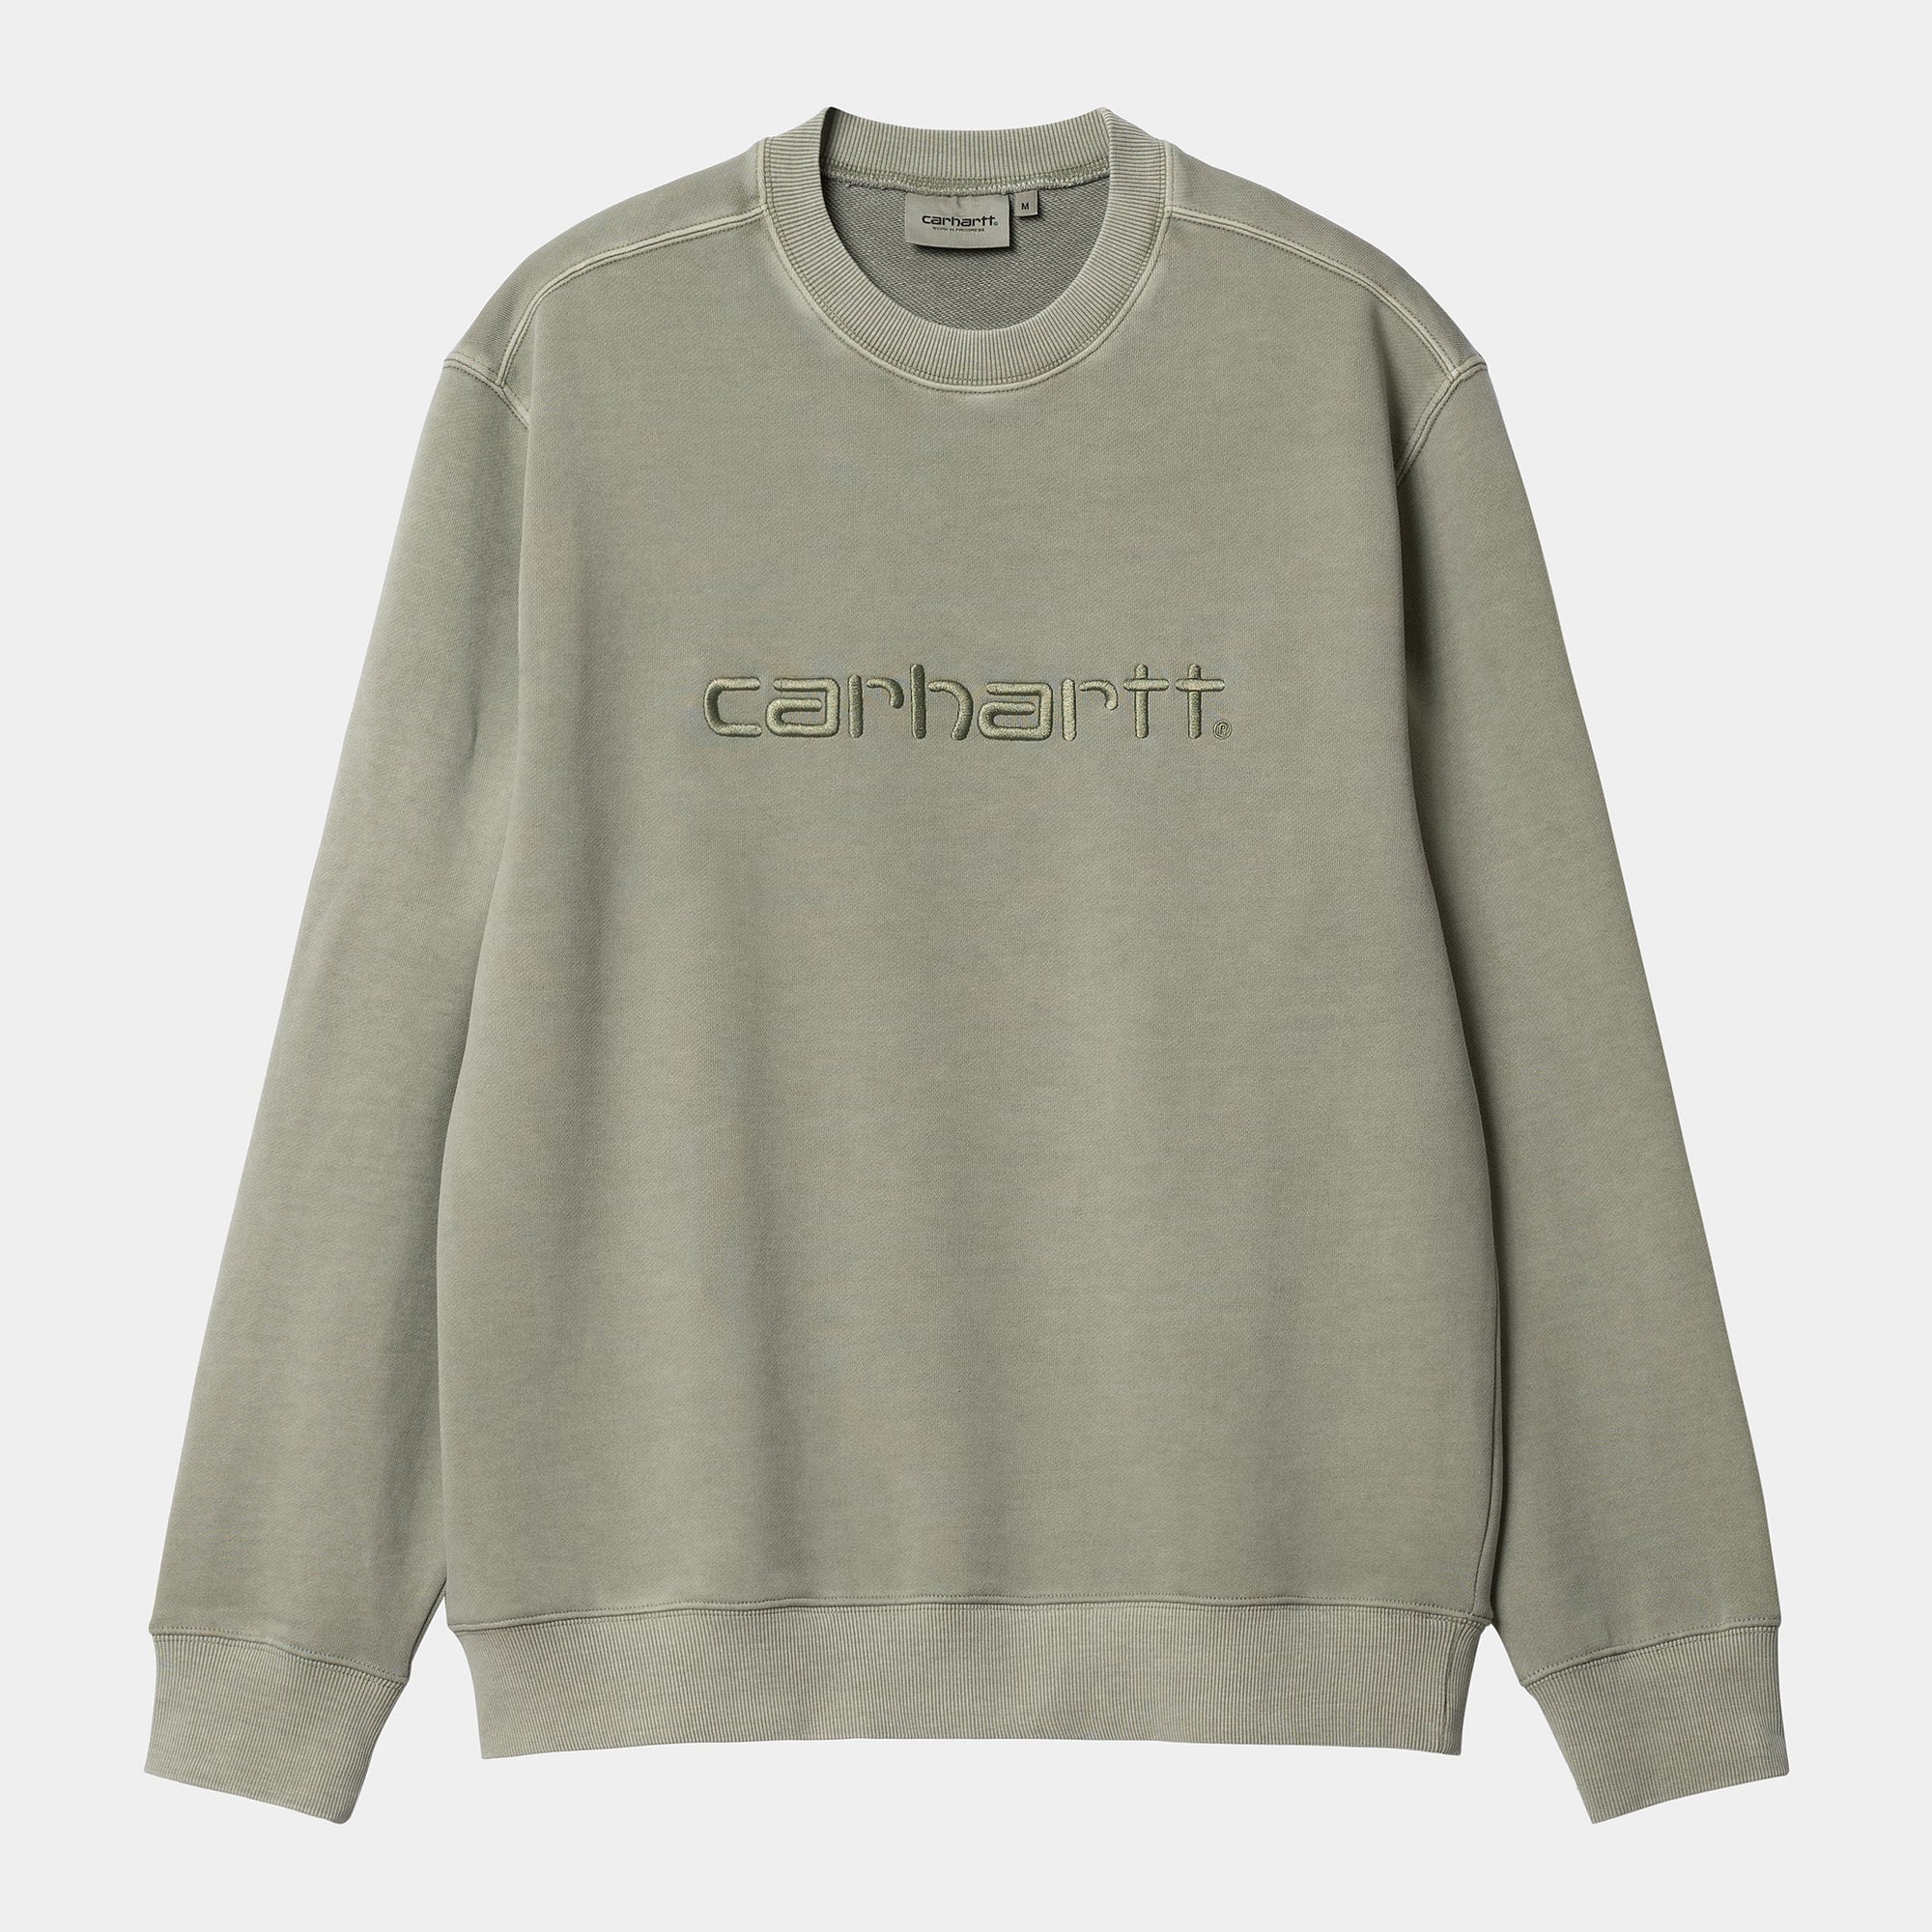 Carhartt WIP - Duster Carhartt Crewneck Sweatshirt - Yucca Garment Dyed